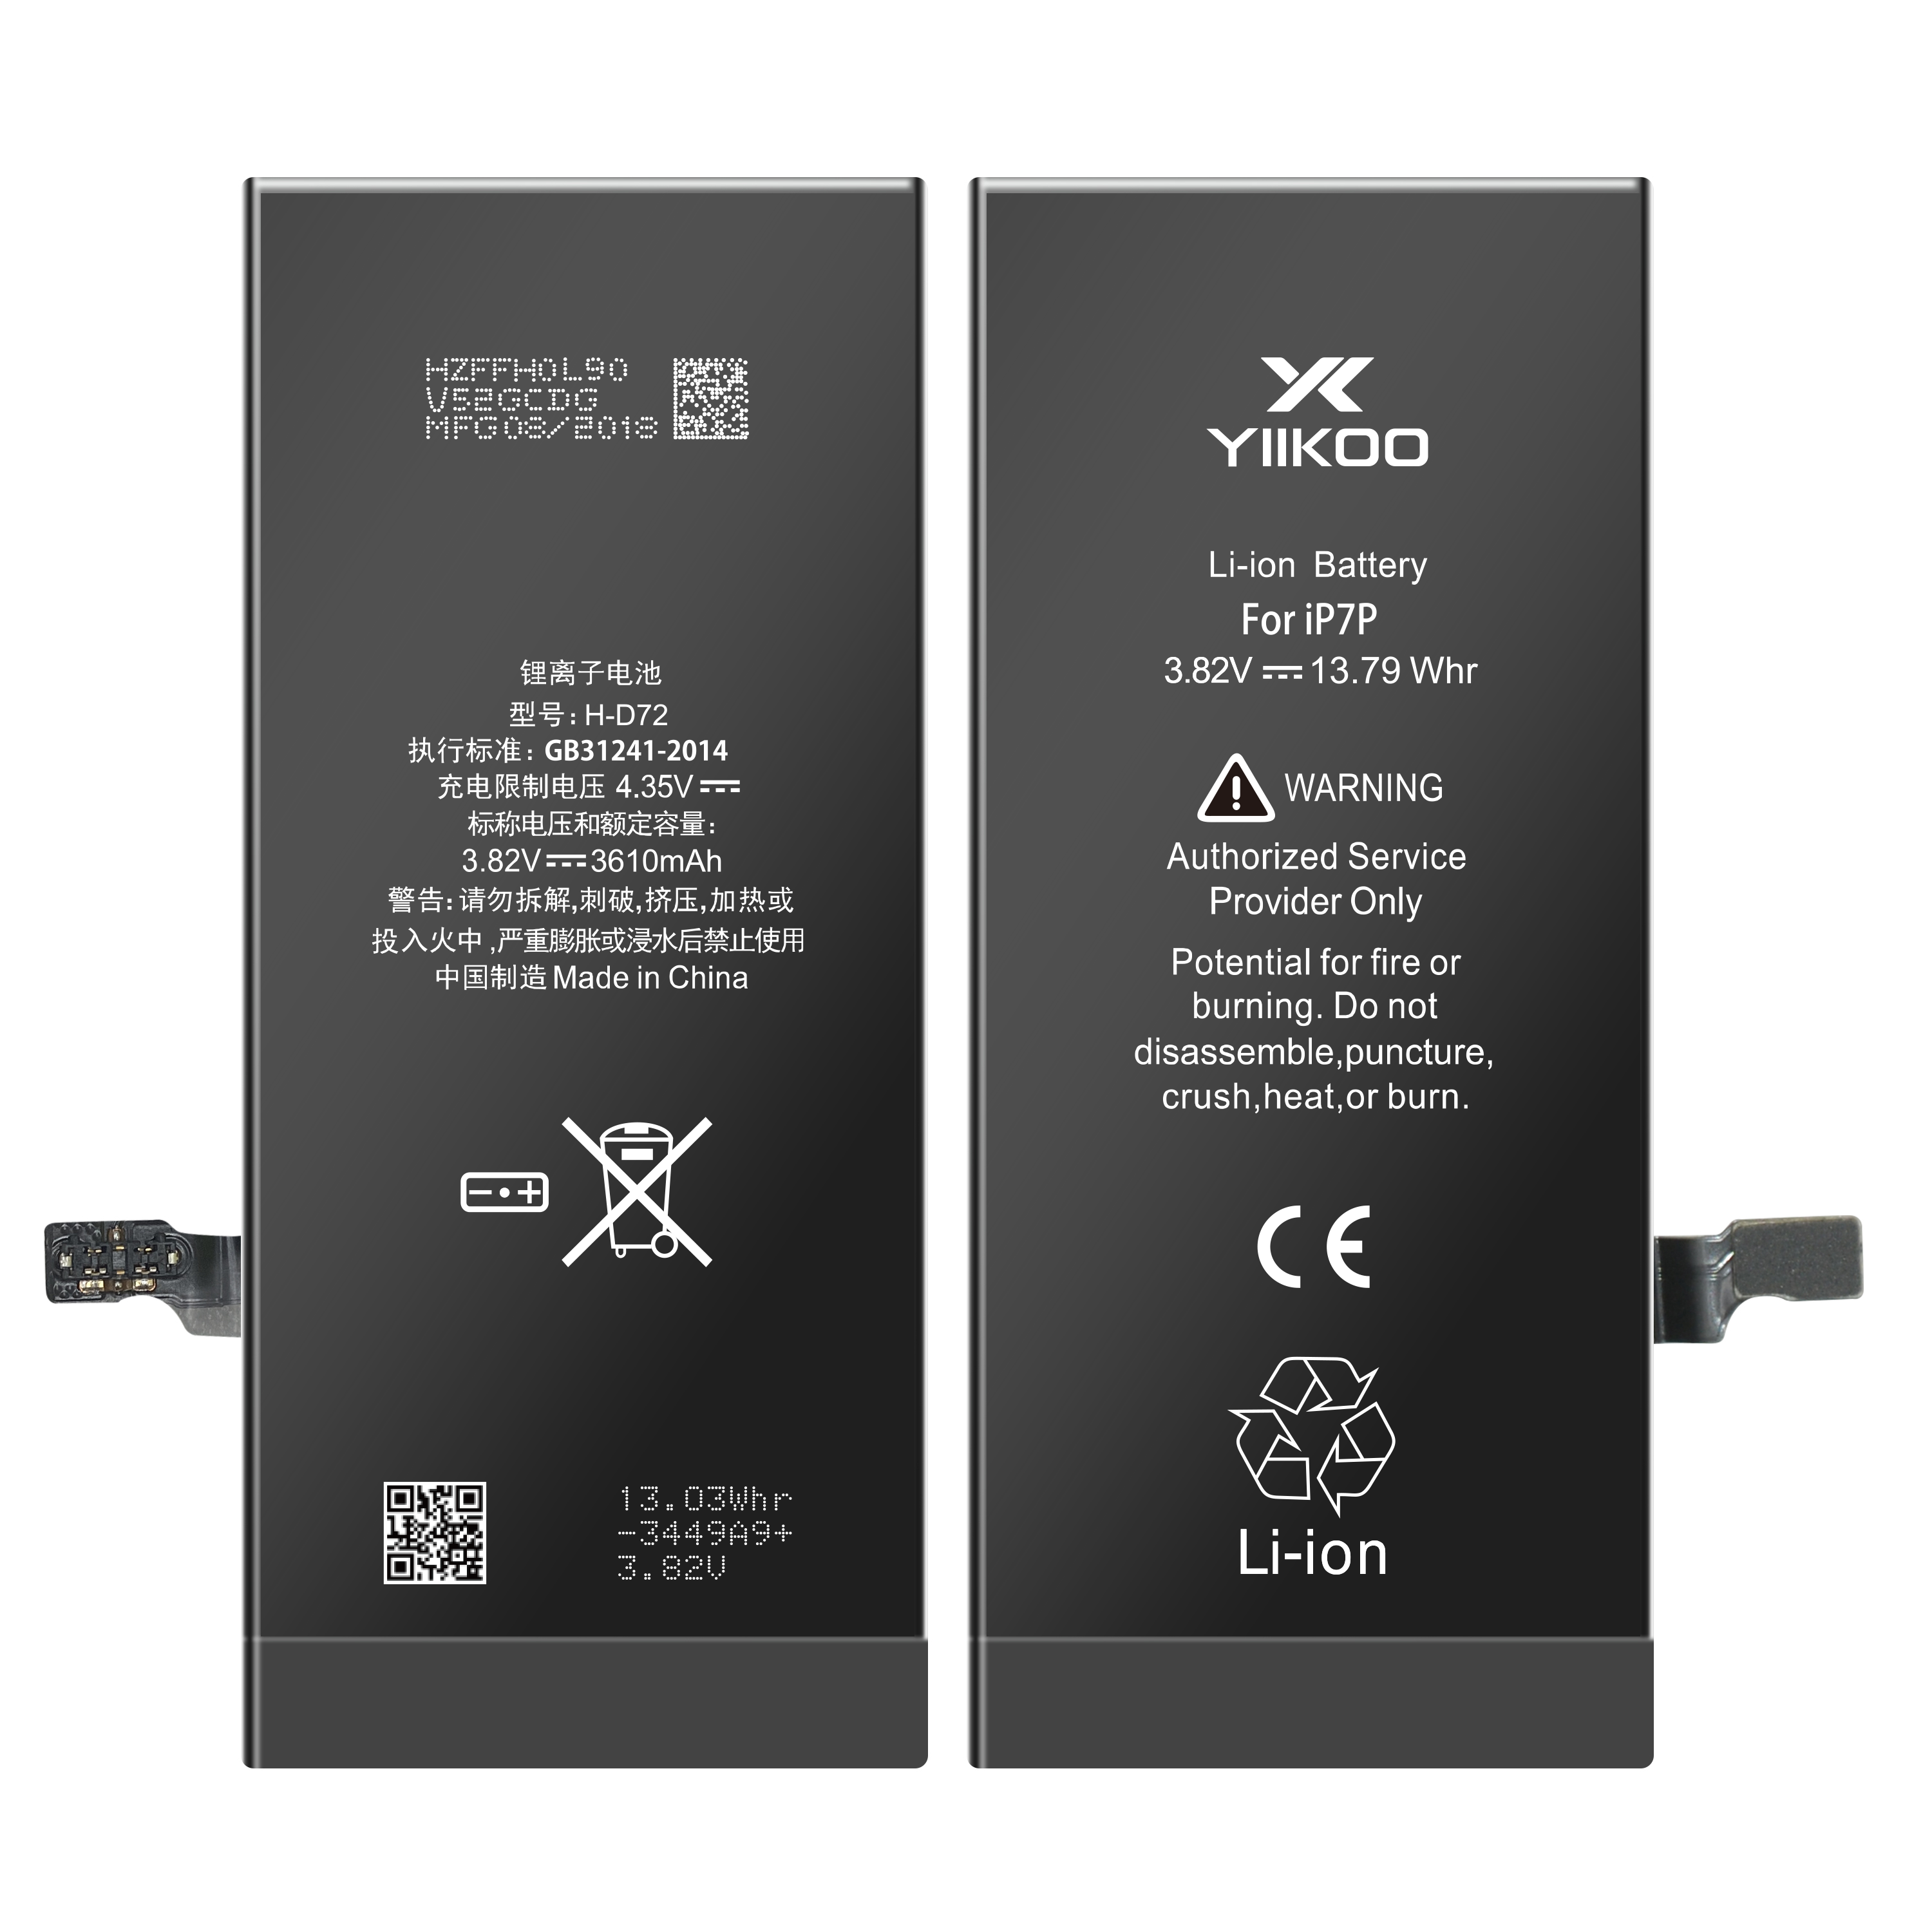 Msds 3380mah Portable Phone Battery Original High Capacity Battery For Iphone 7P yiikoo Brand